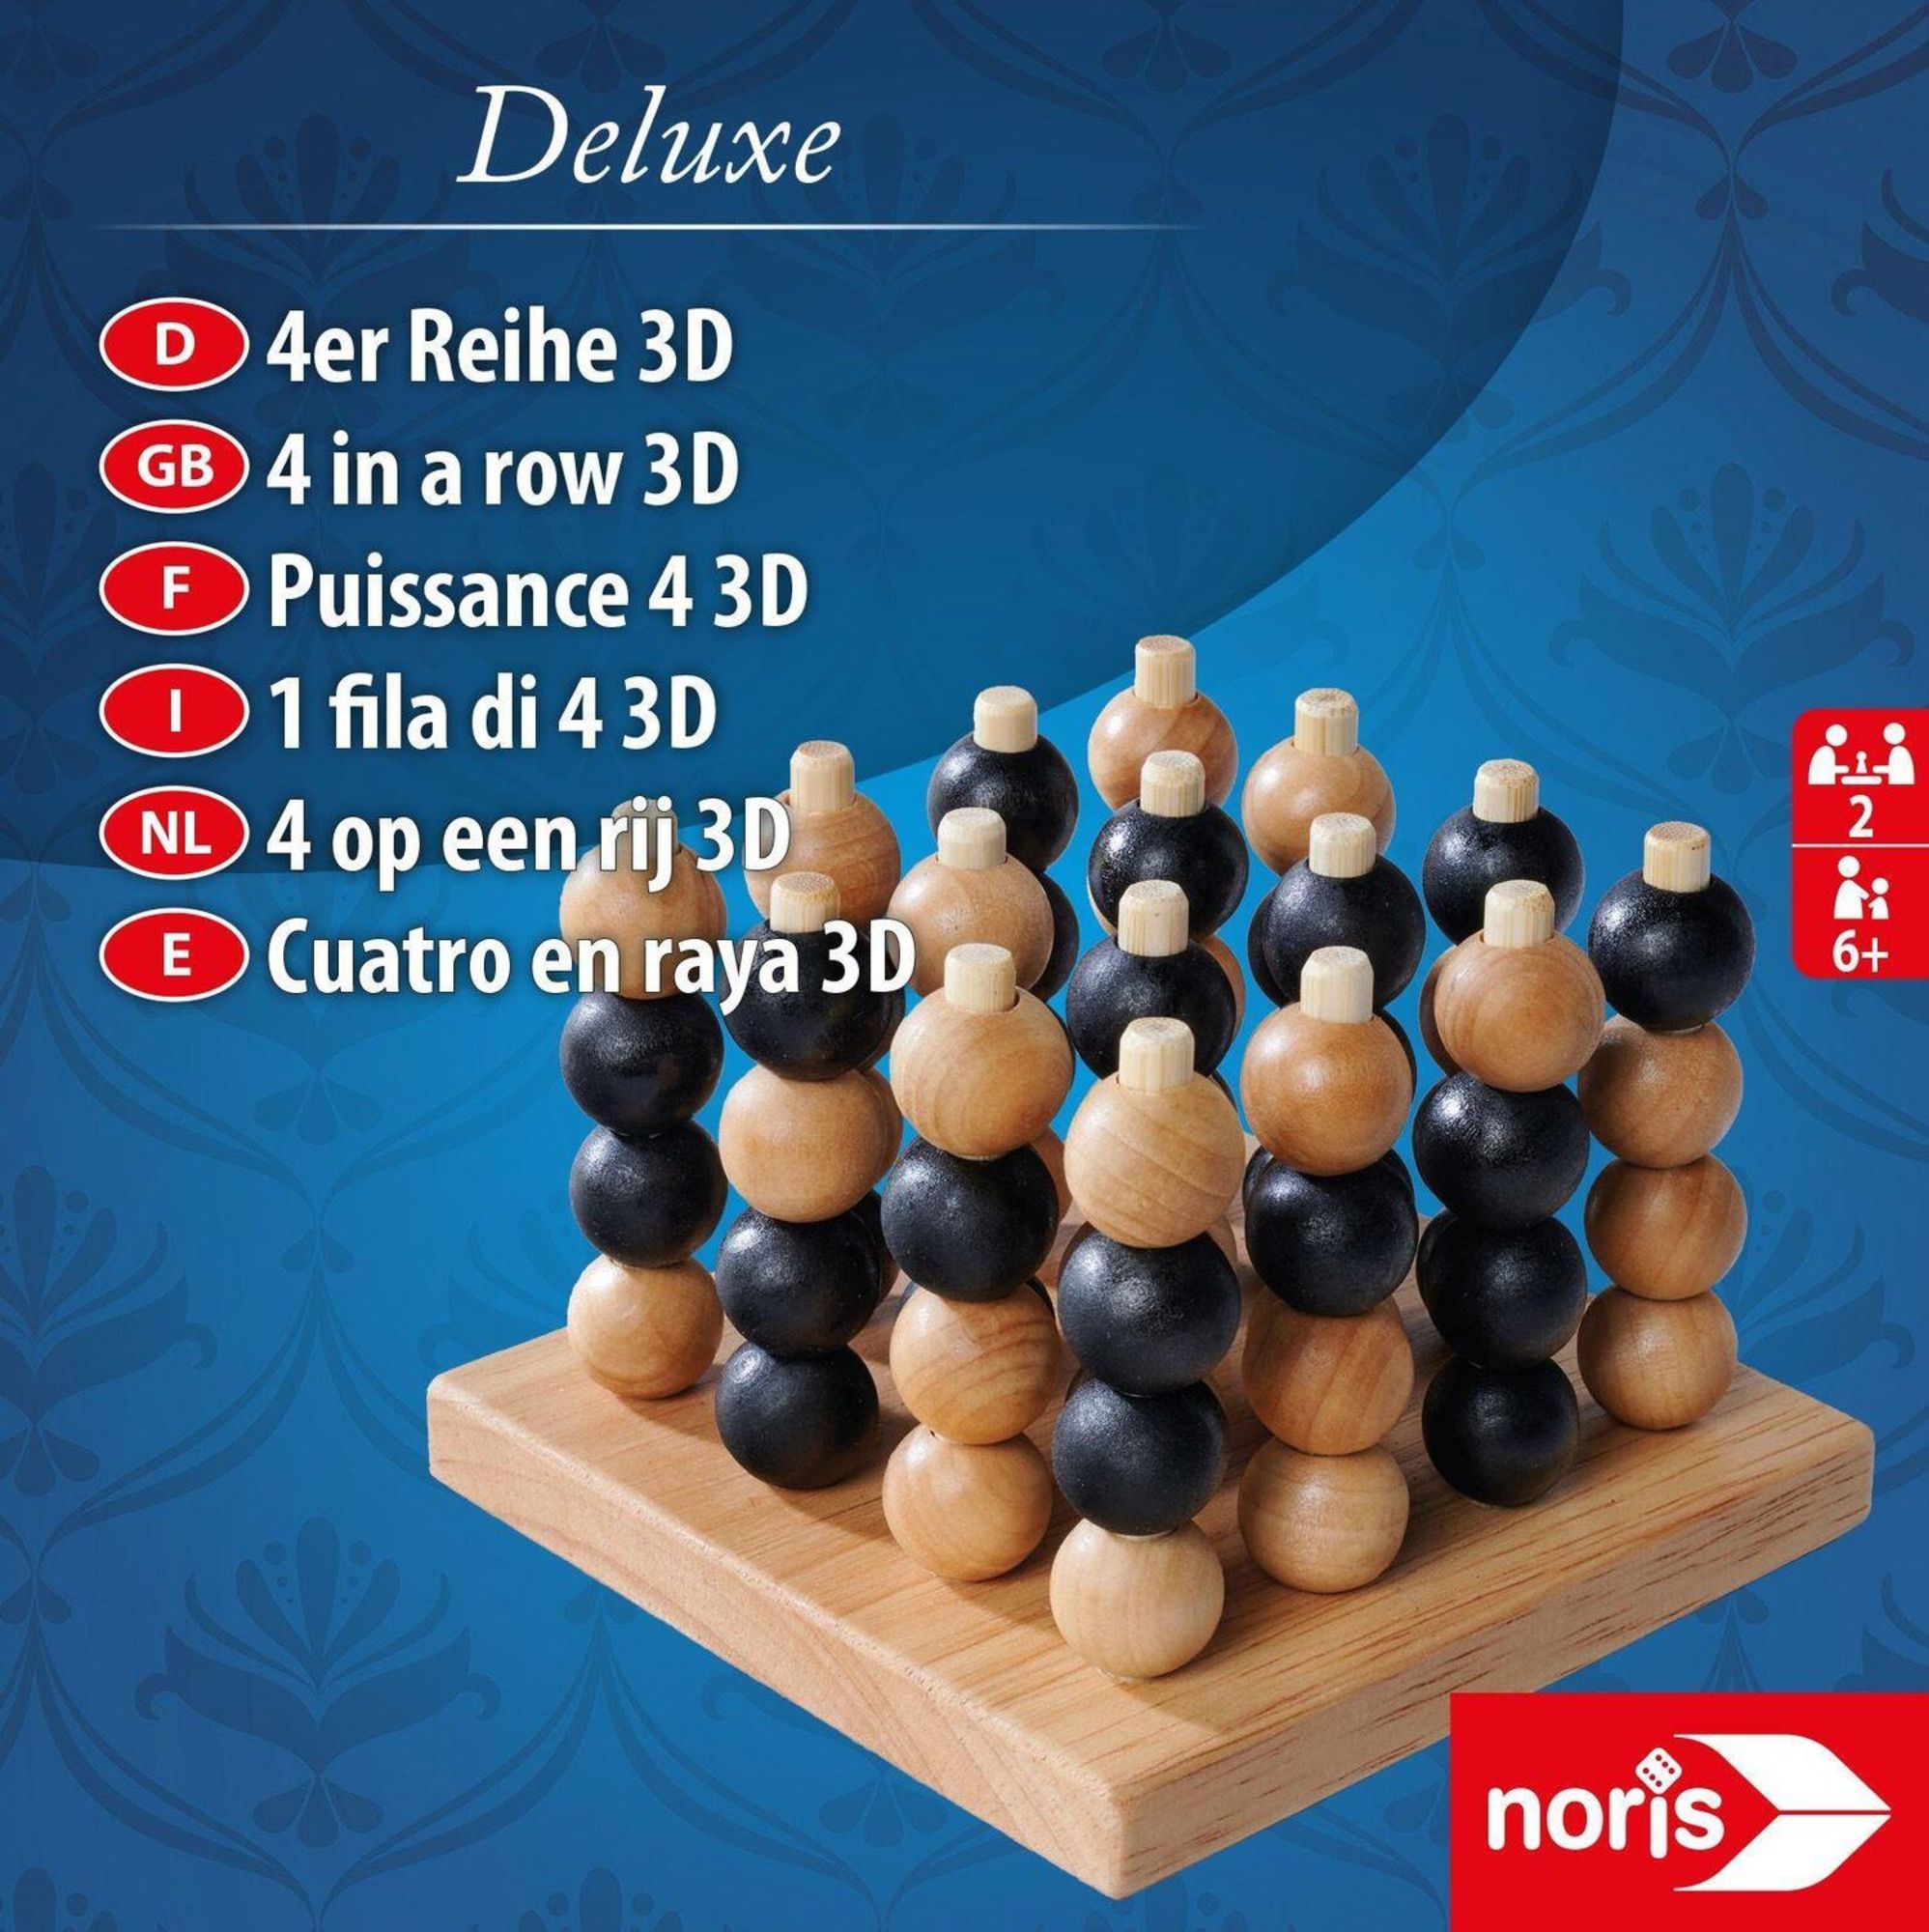 Deluxe 4er Reihe 3D kaufen